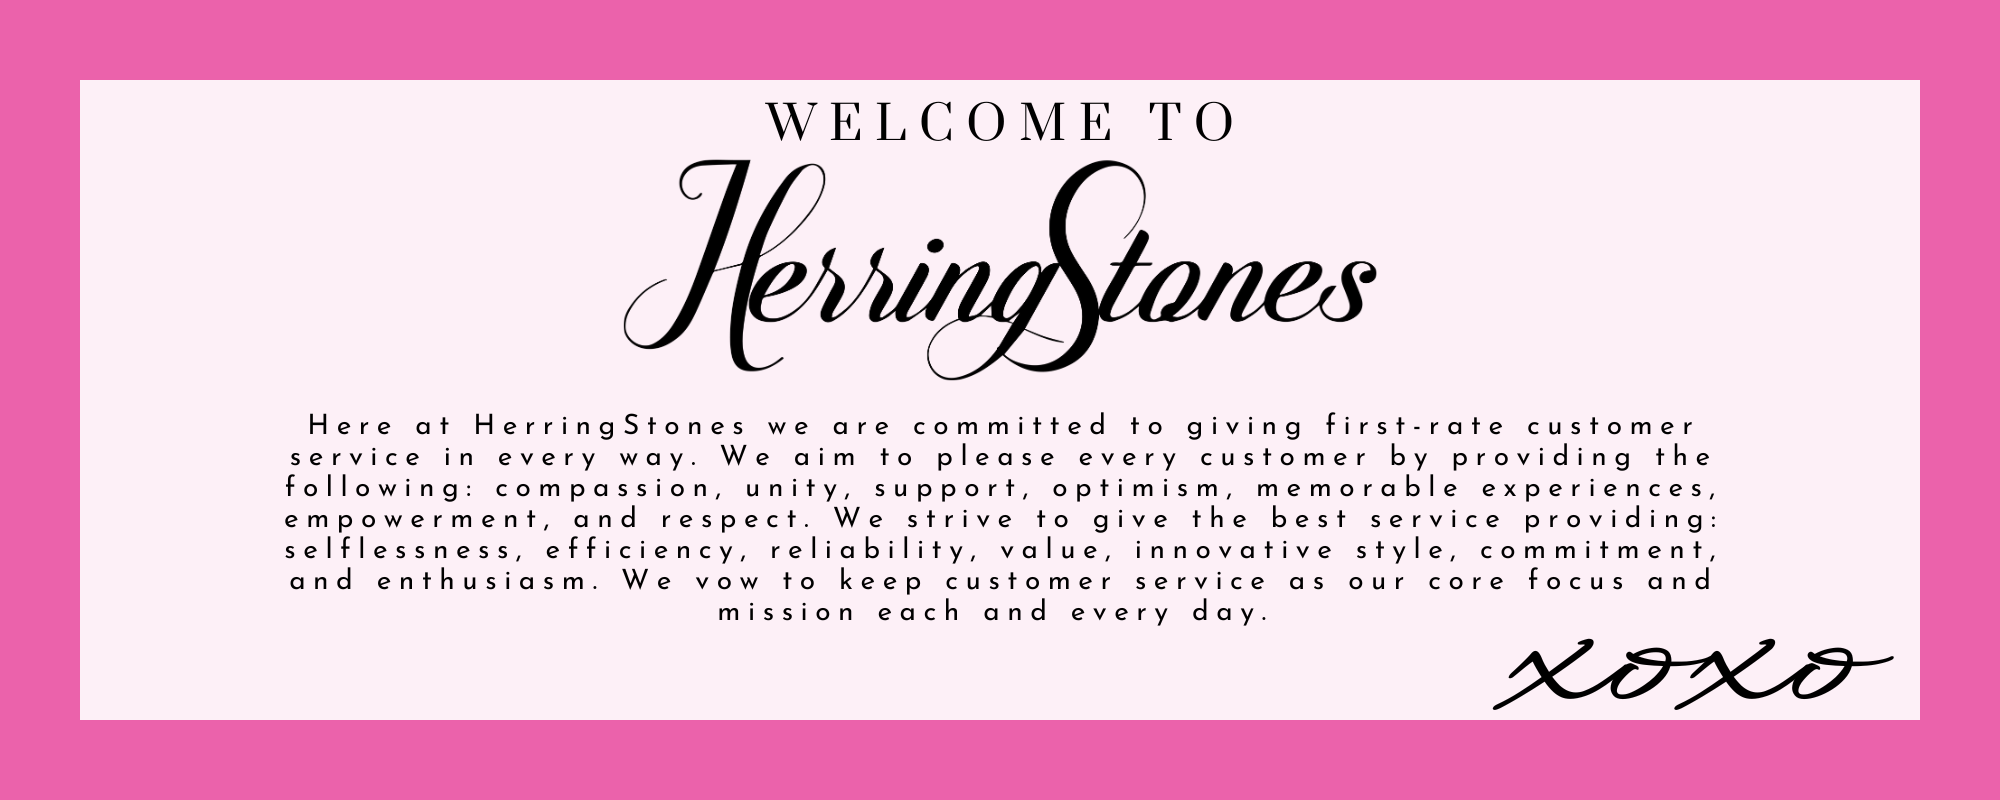 Herringstones Mission Statement